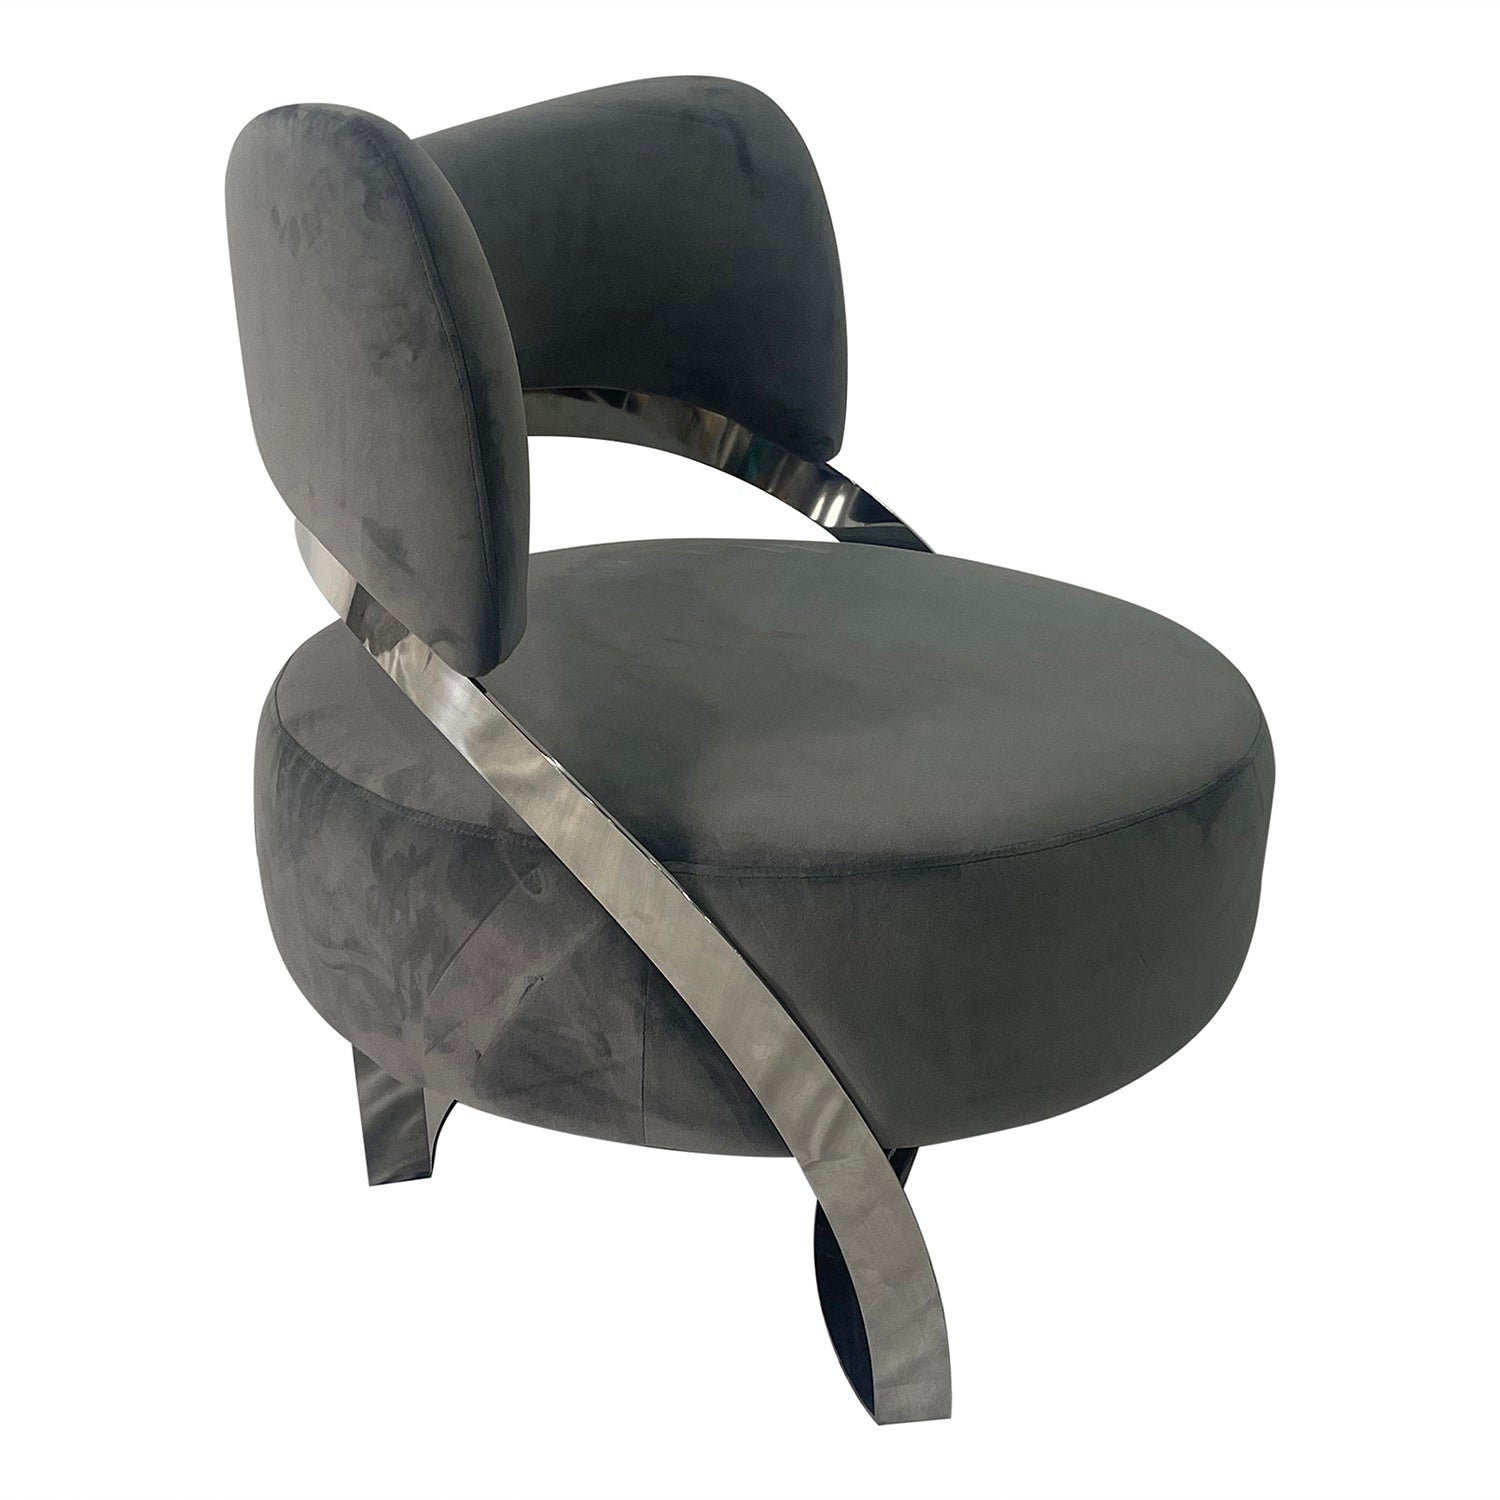 Ashy Grey and Silver Sofa Chair